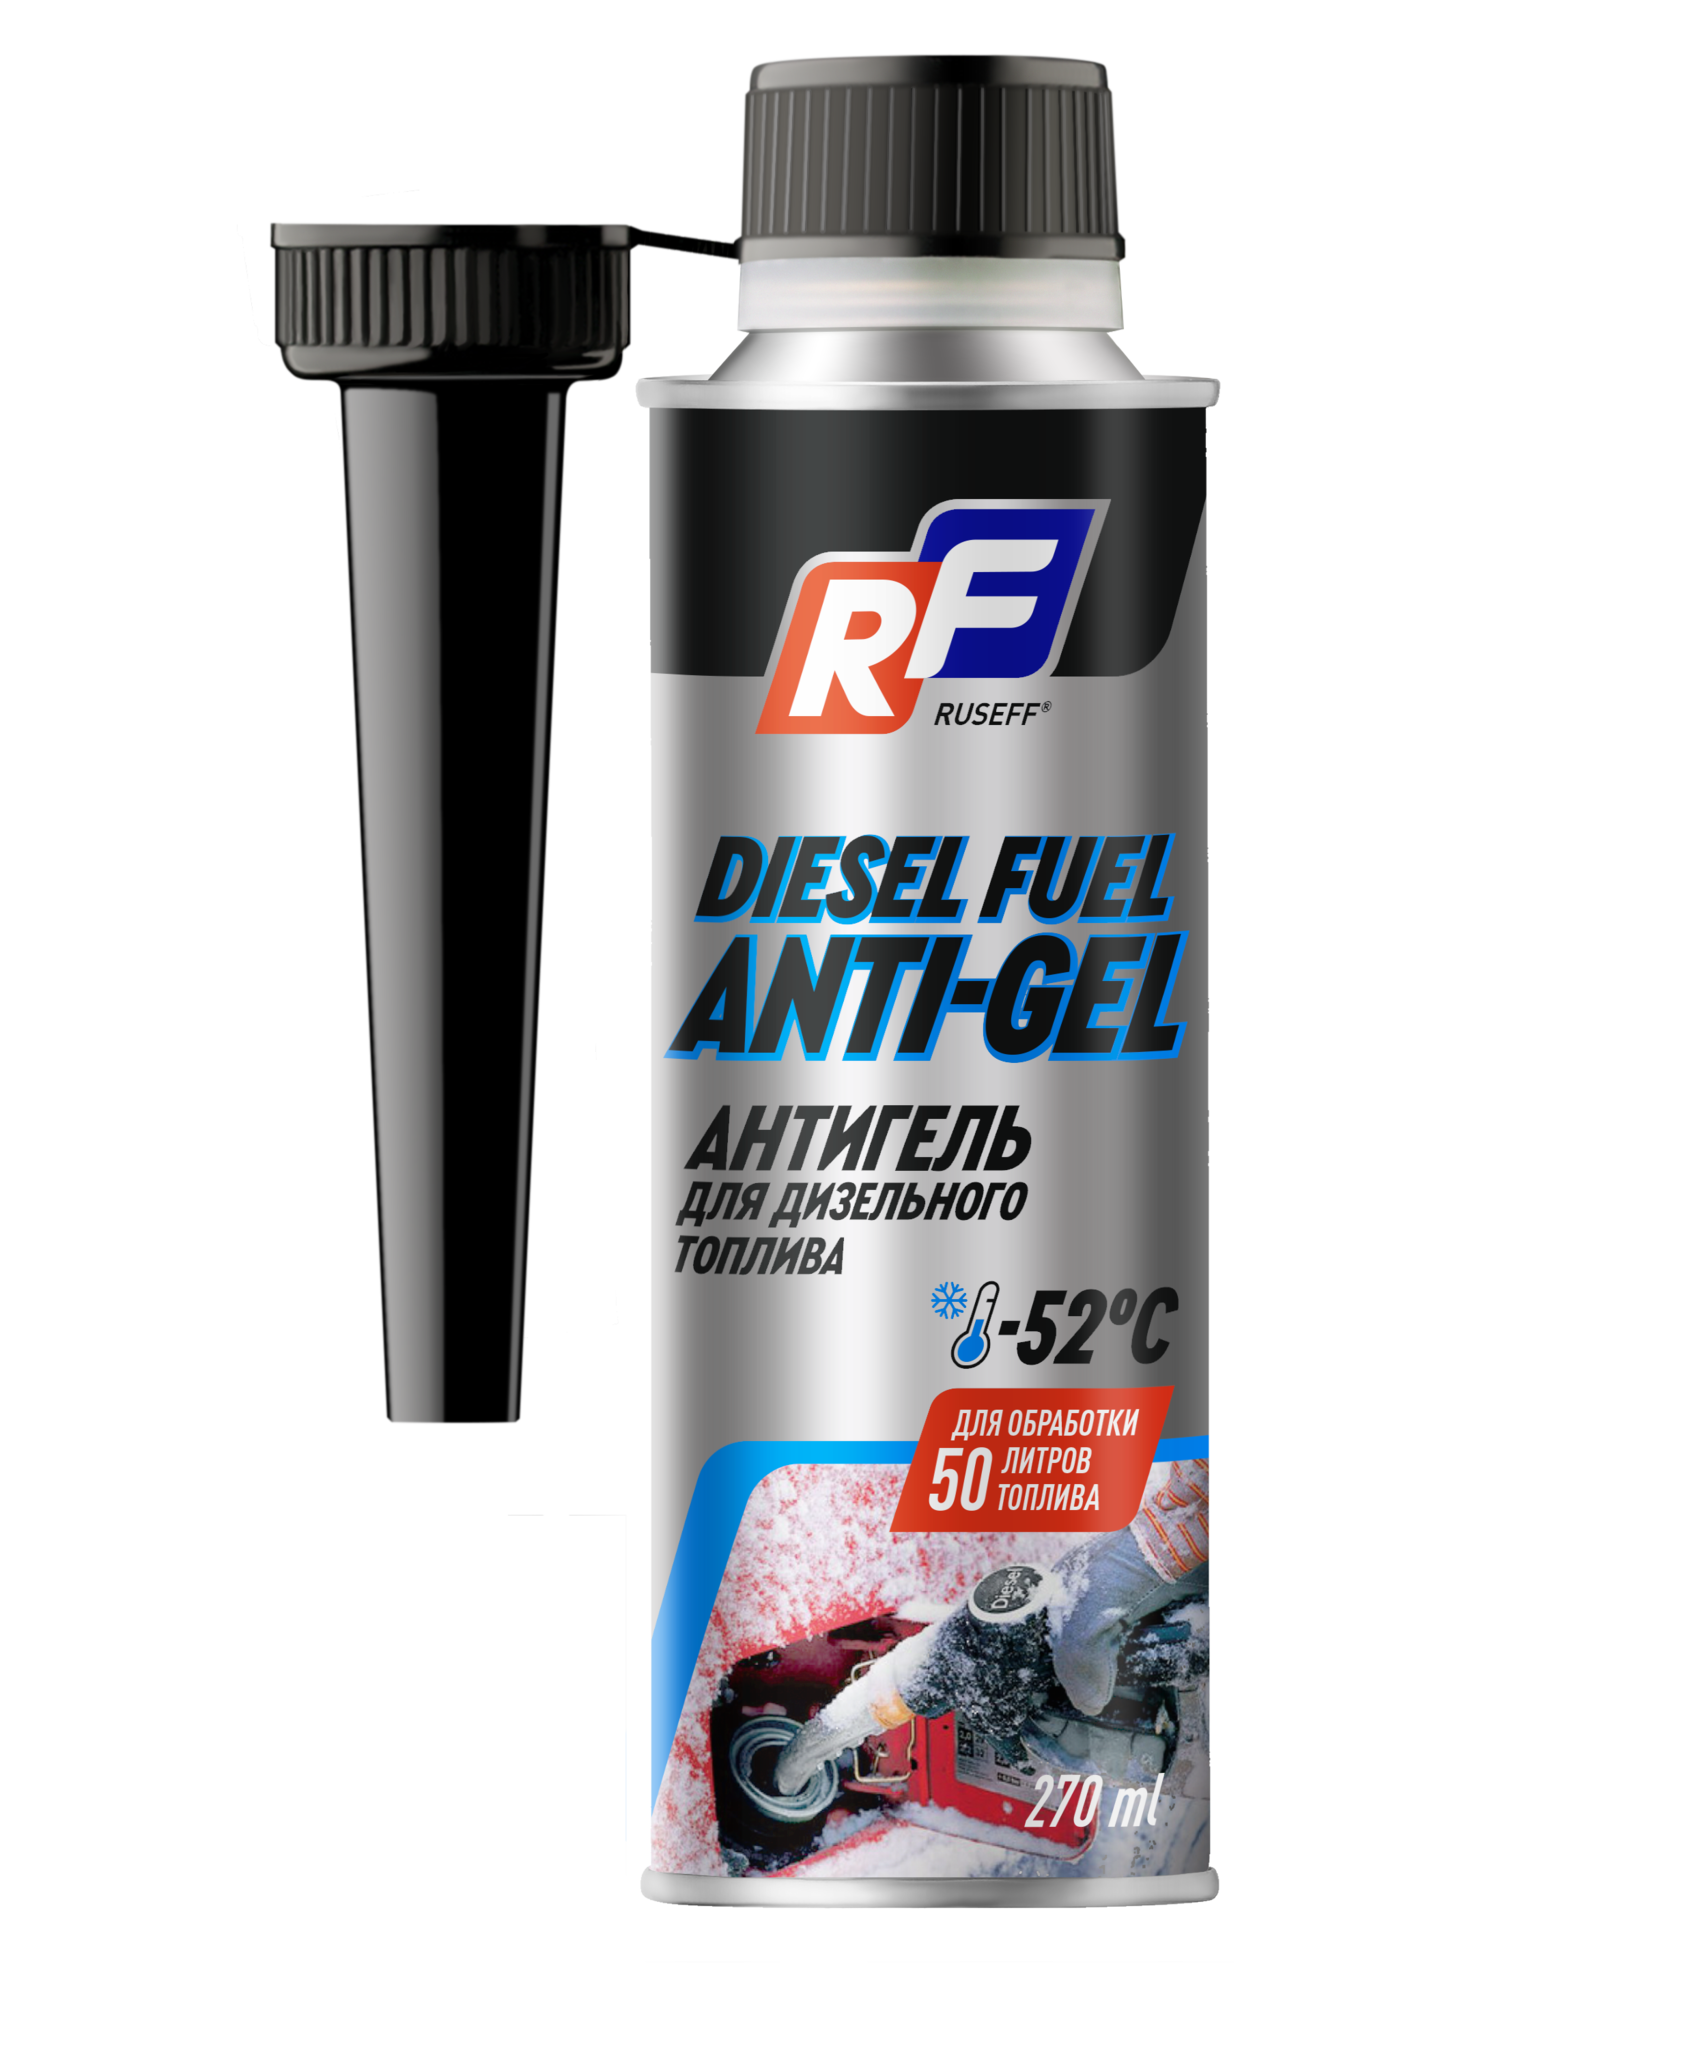 Ruseff Diesel Fuel Anti-Gel Антигель для легковых автомобилей 1:50л